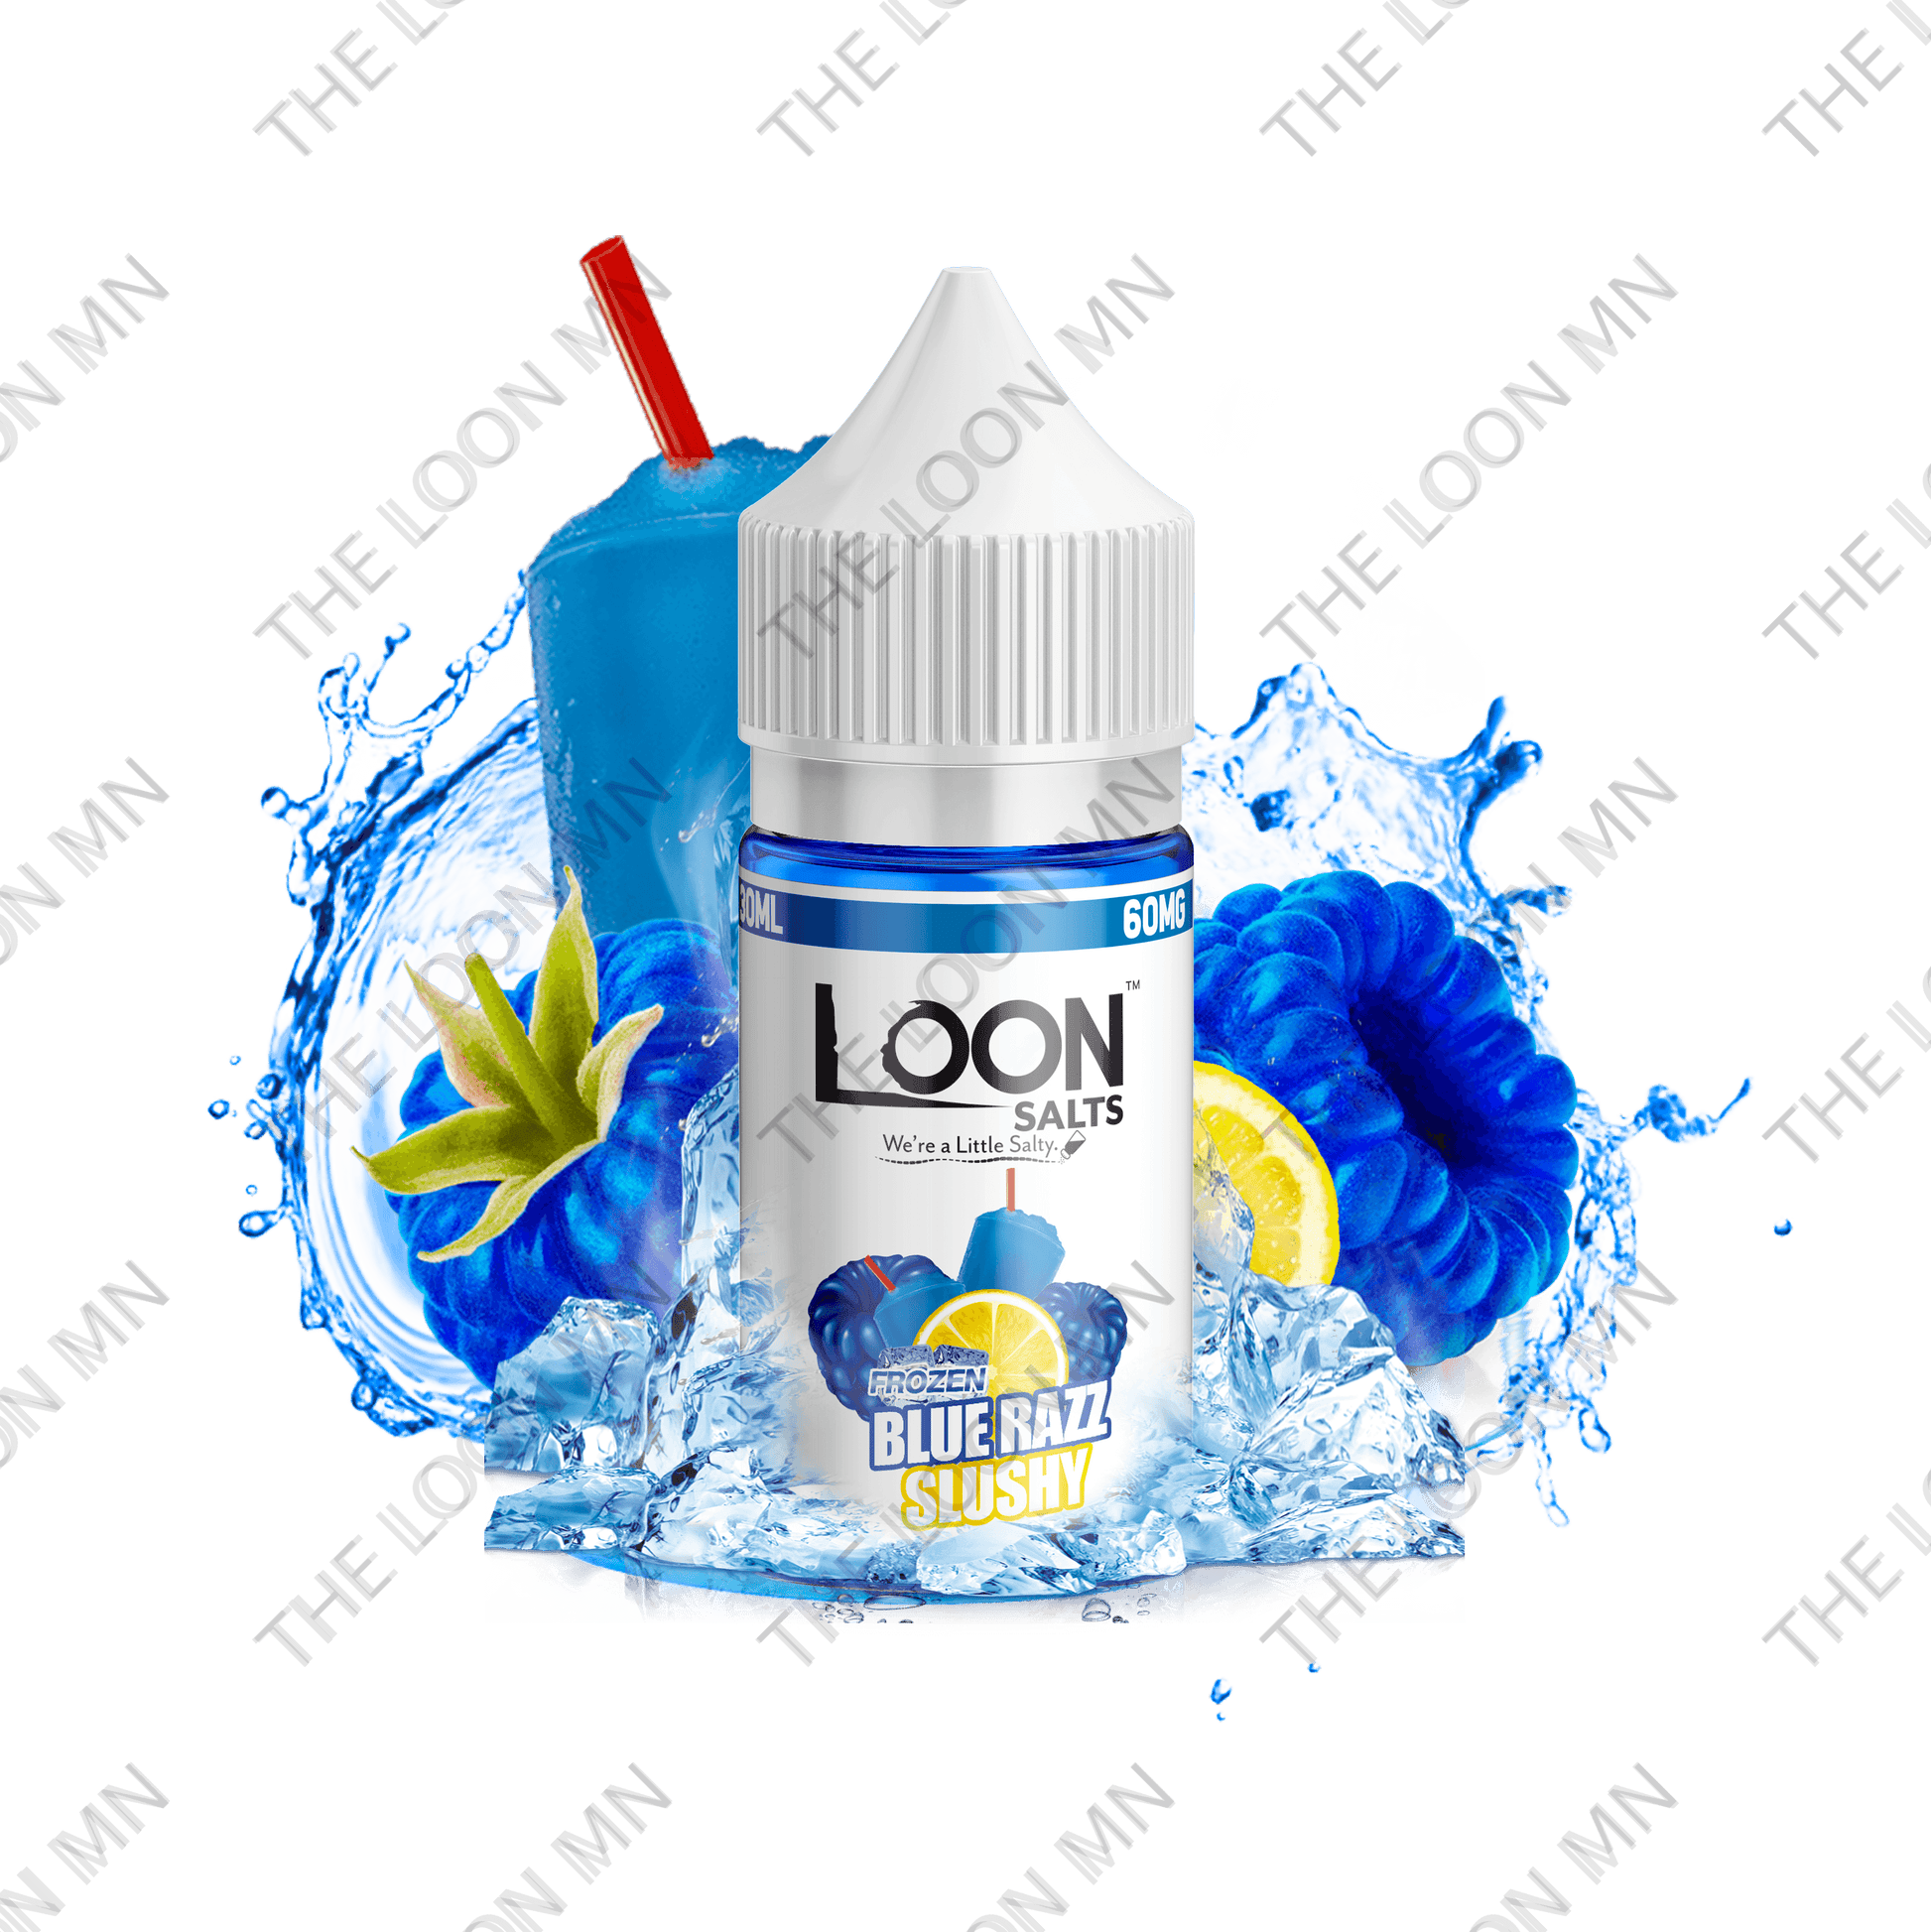 LOON SALTS - BLUE RAZZ SLUSHY - THE LOON